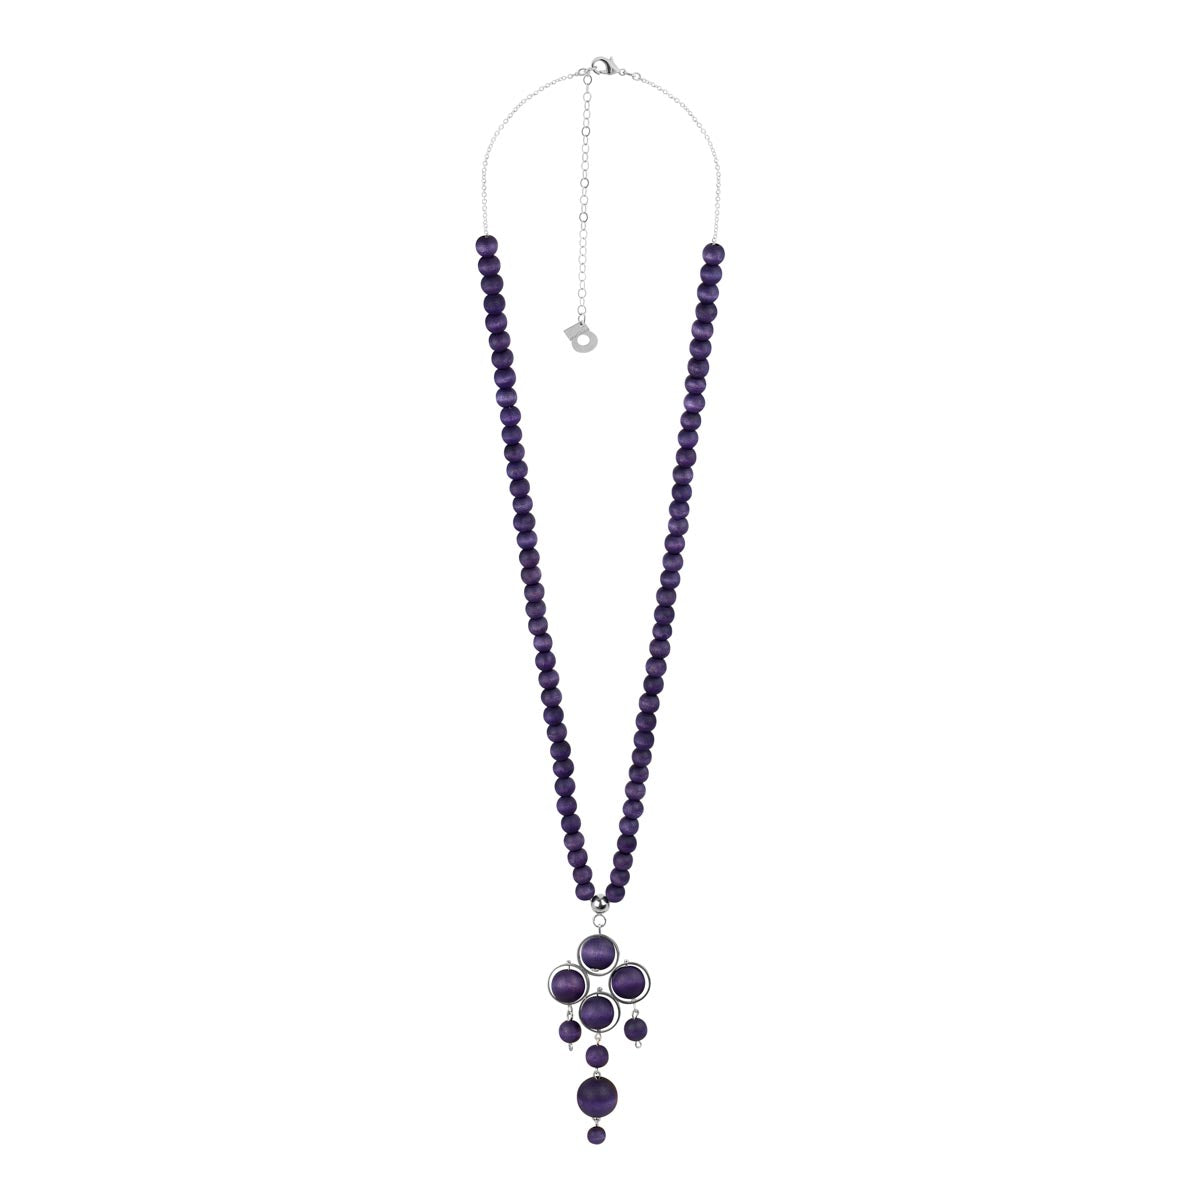 Ristiveto pendant, dark purple